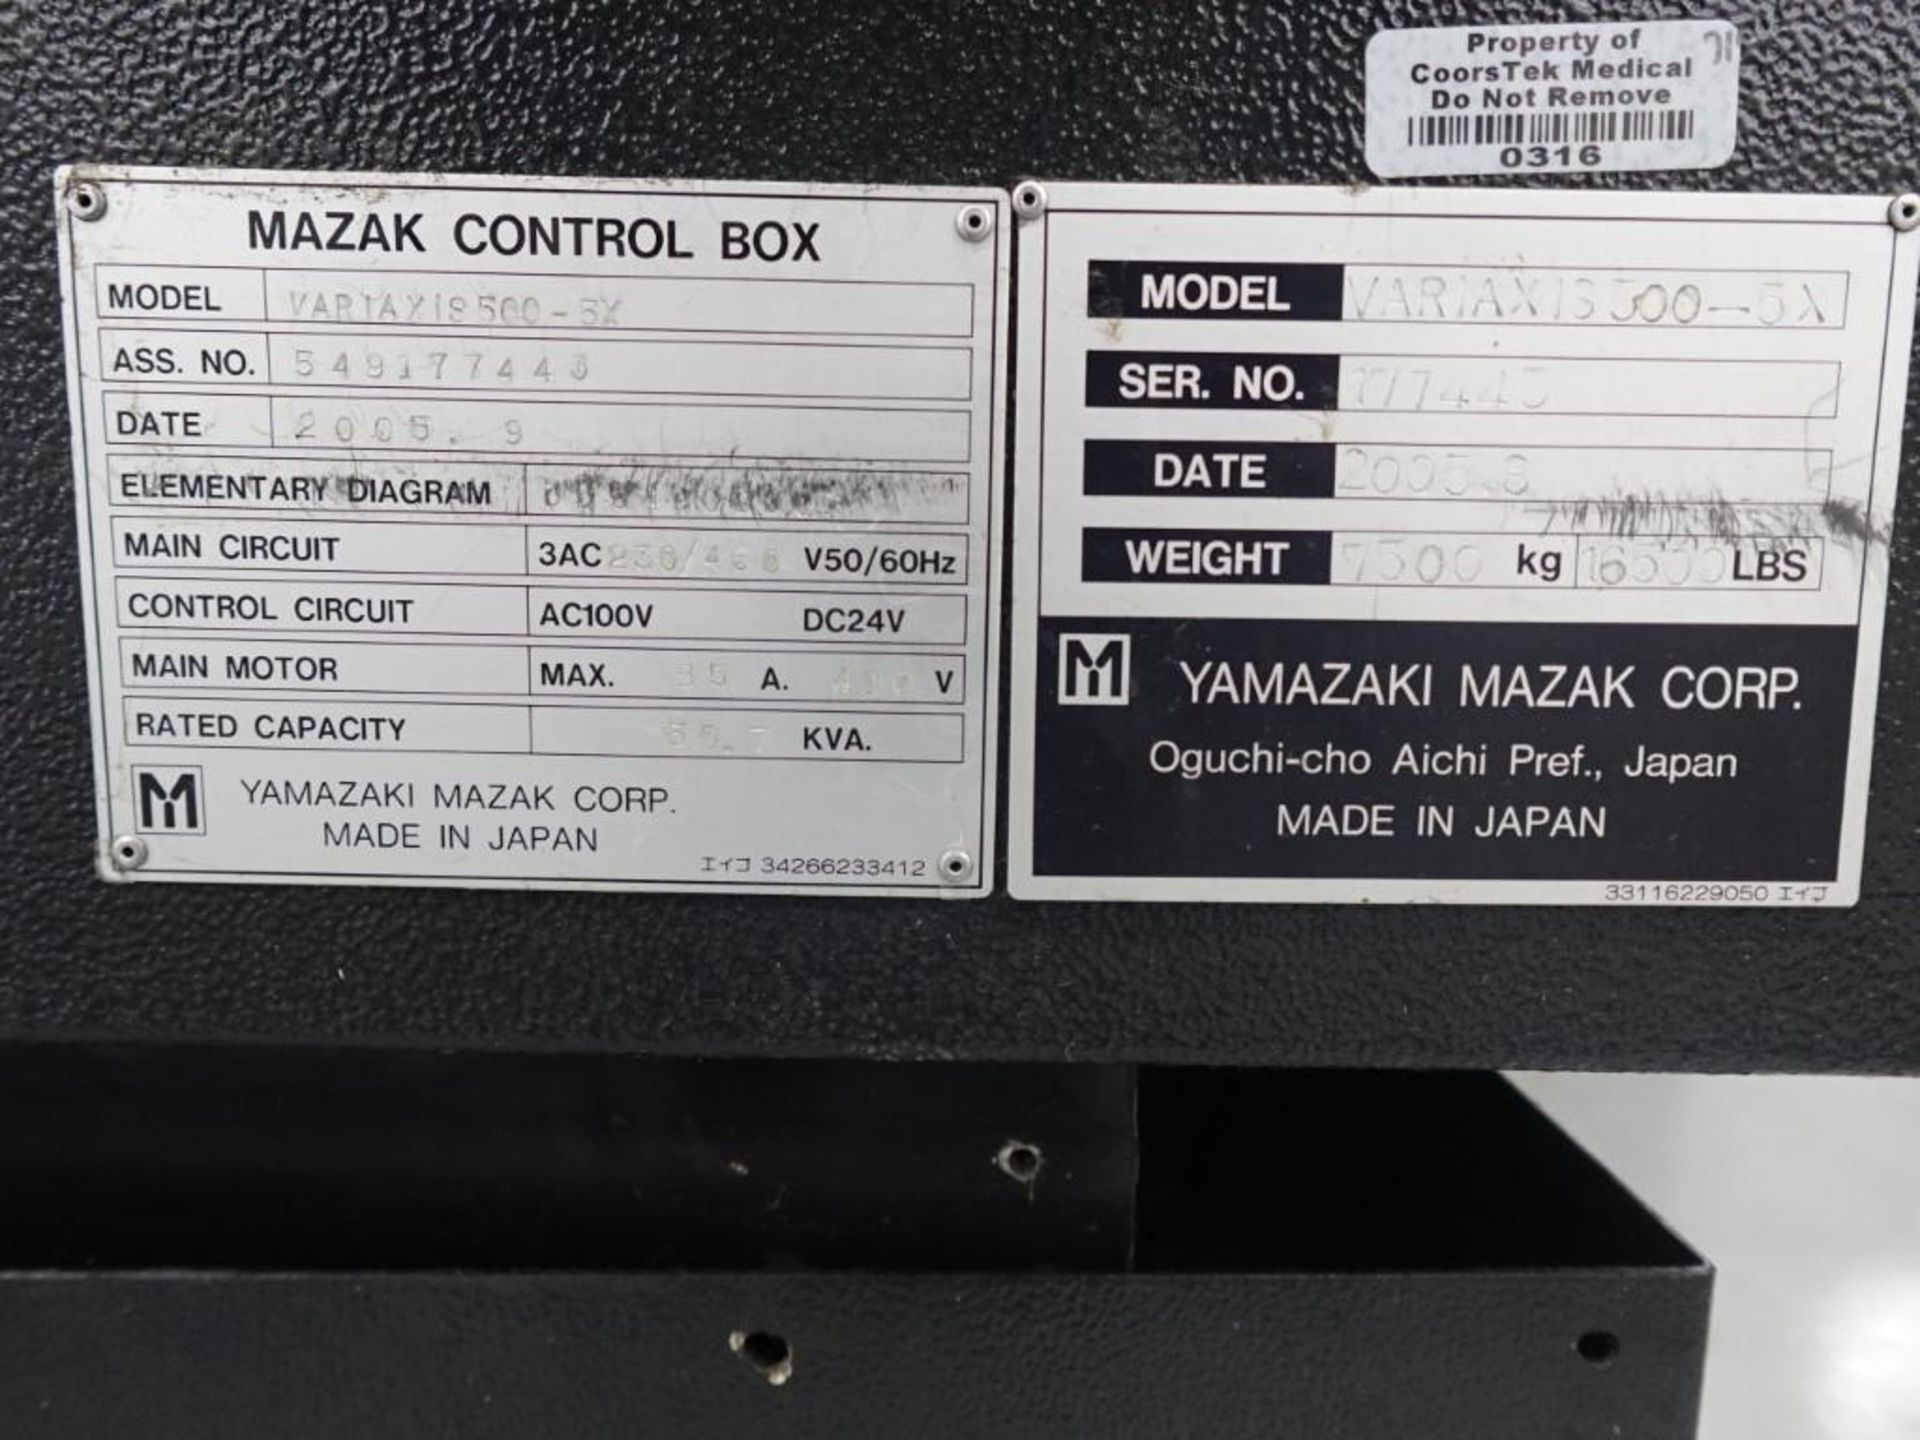 Mazak Variaxis 500-5X-II 5-Axis CNC Vertical Machining Center - Image 7 of 15